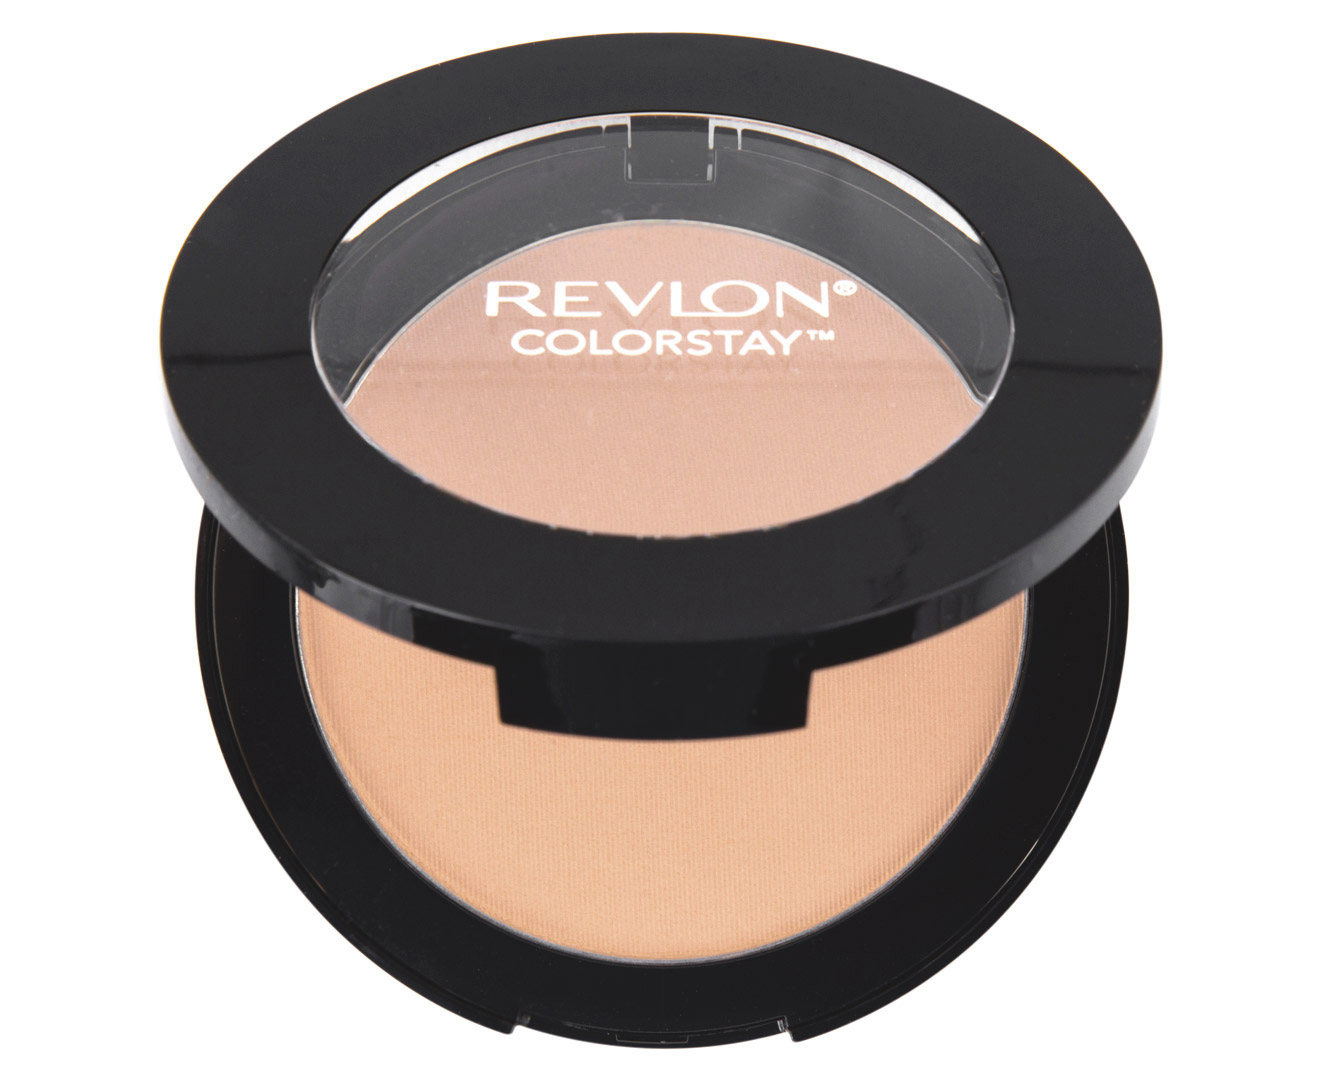 Revlon ColorStay Pressed Powder 8.4g - #830 Light/Medium 309975424034 ...